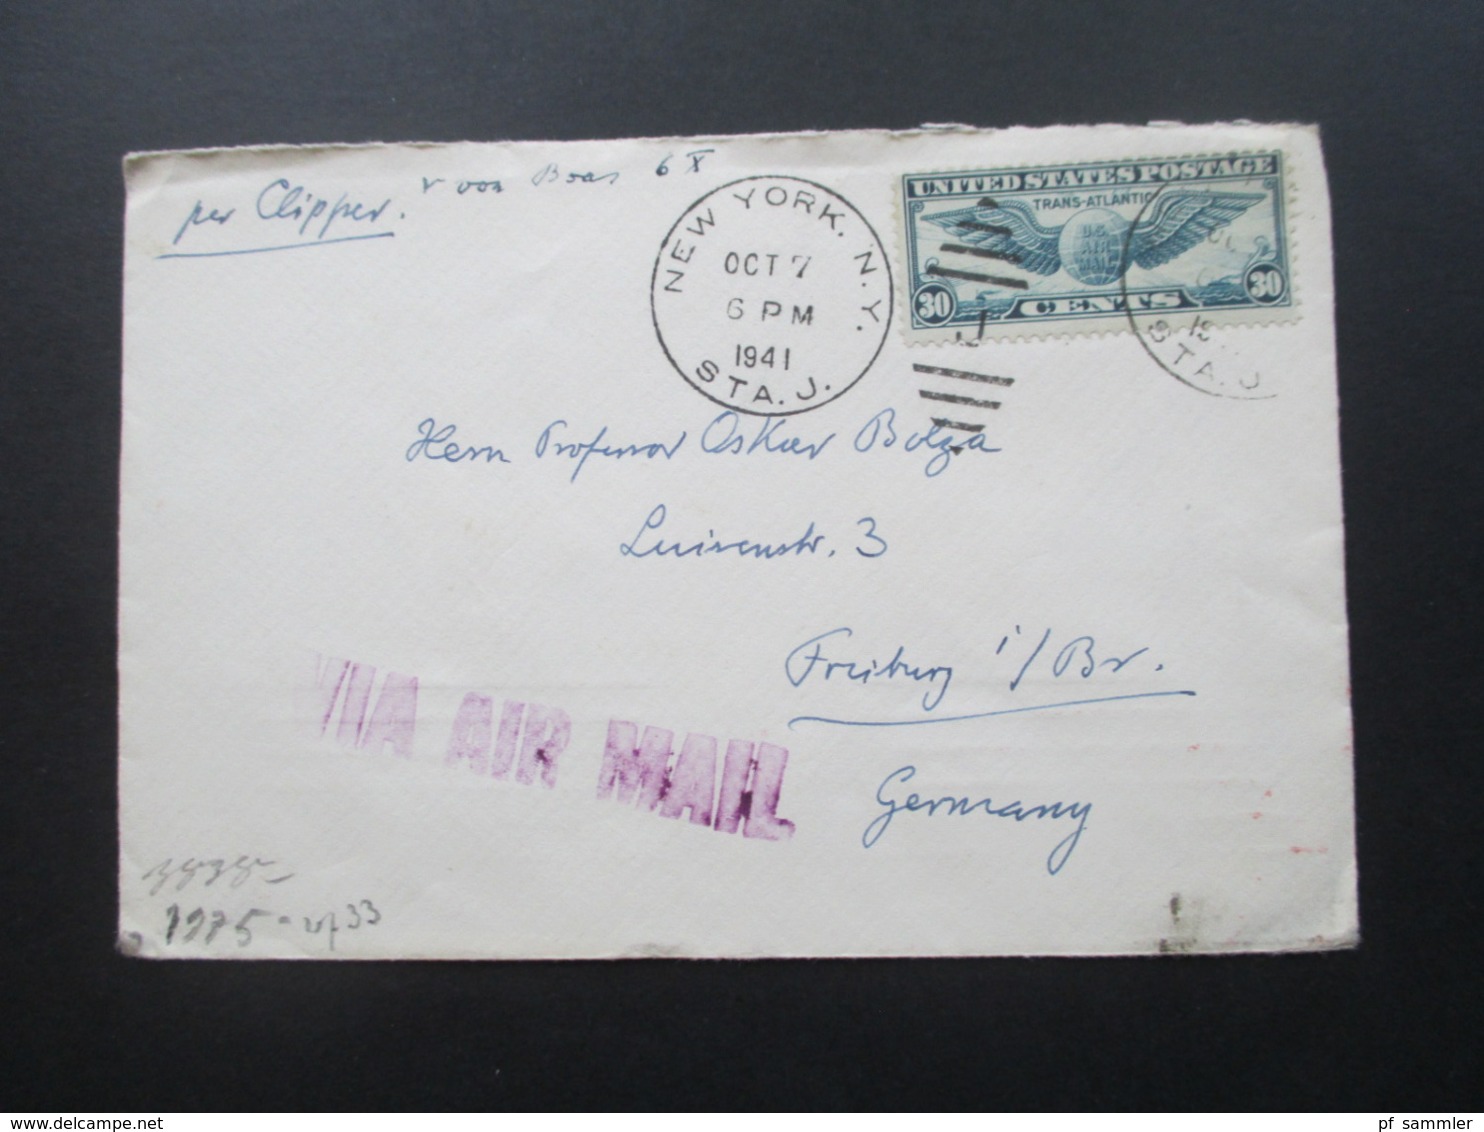 USA 1941 Zensurbeleg Mehrfachzensur OKW Air Mail Per Clipper Trans Atlantic Social Philately Dr.Oskar Bolza Mathematiker - Briefe U. Dokumente